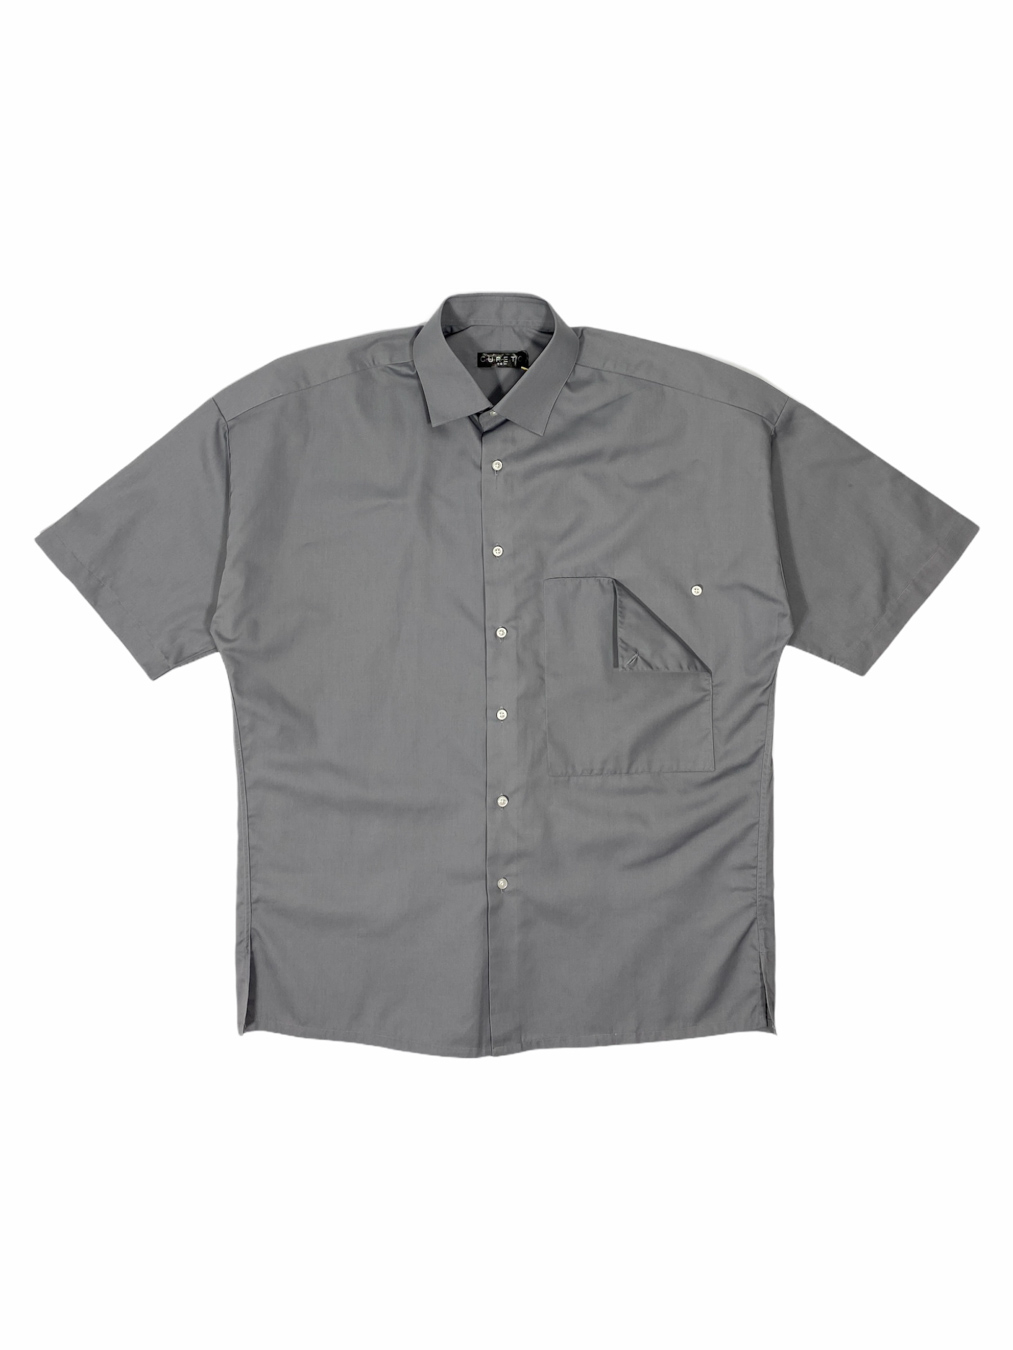 Pocket Shirt (Grey)